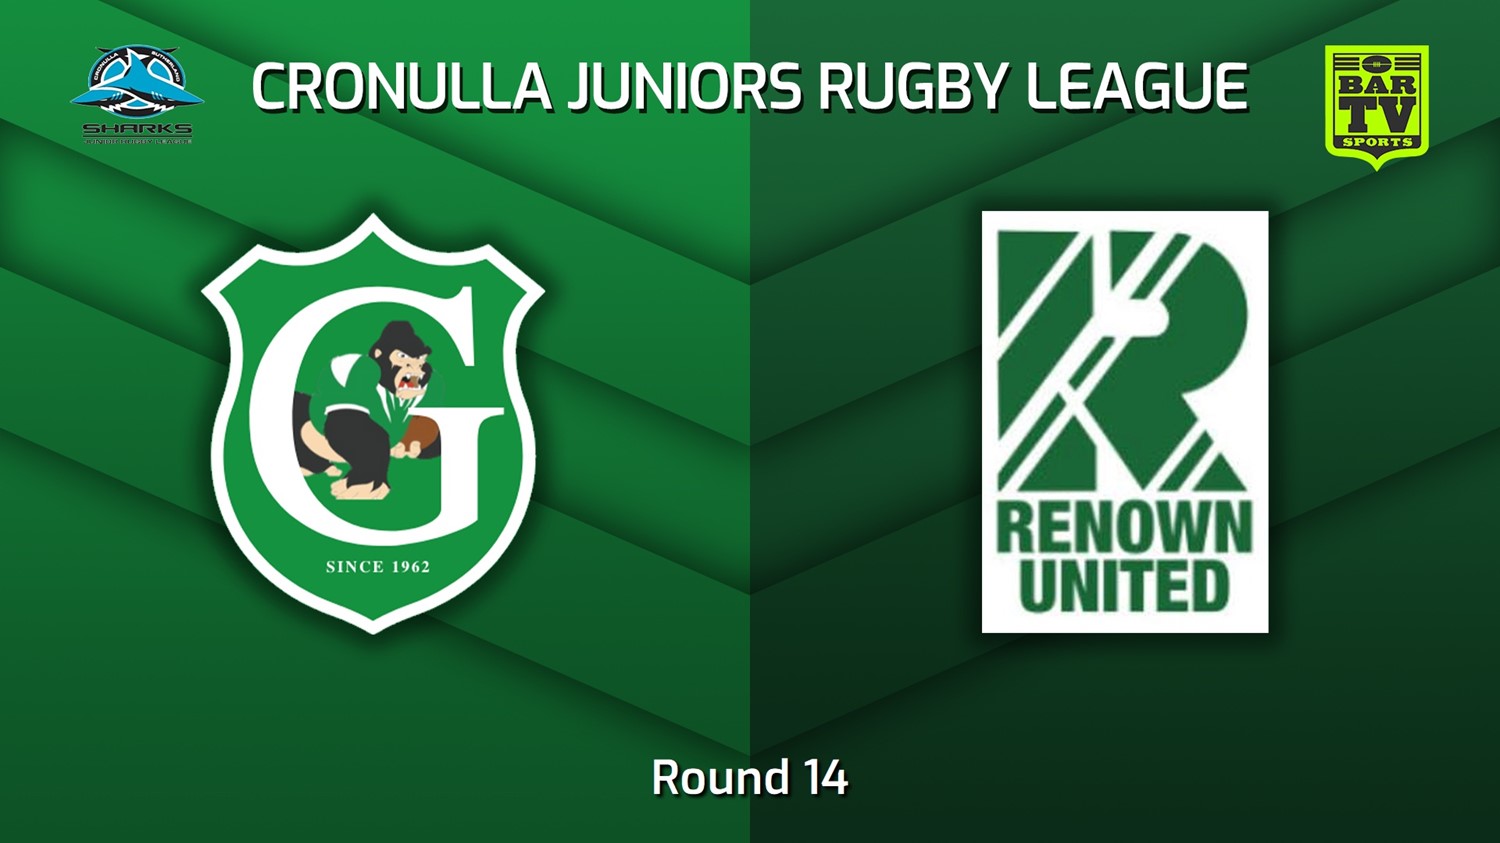 220807-Cronulla Juniors - U18s Round 14 - Gymea Gorillas v Renown United Minigame Slate Image